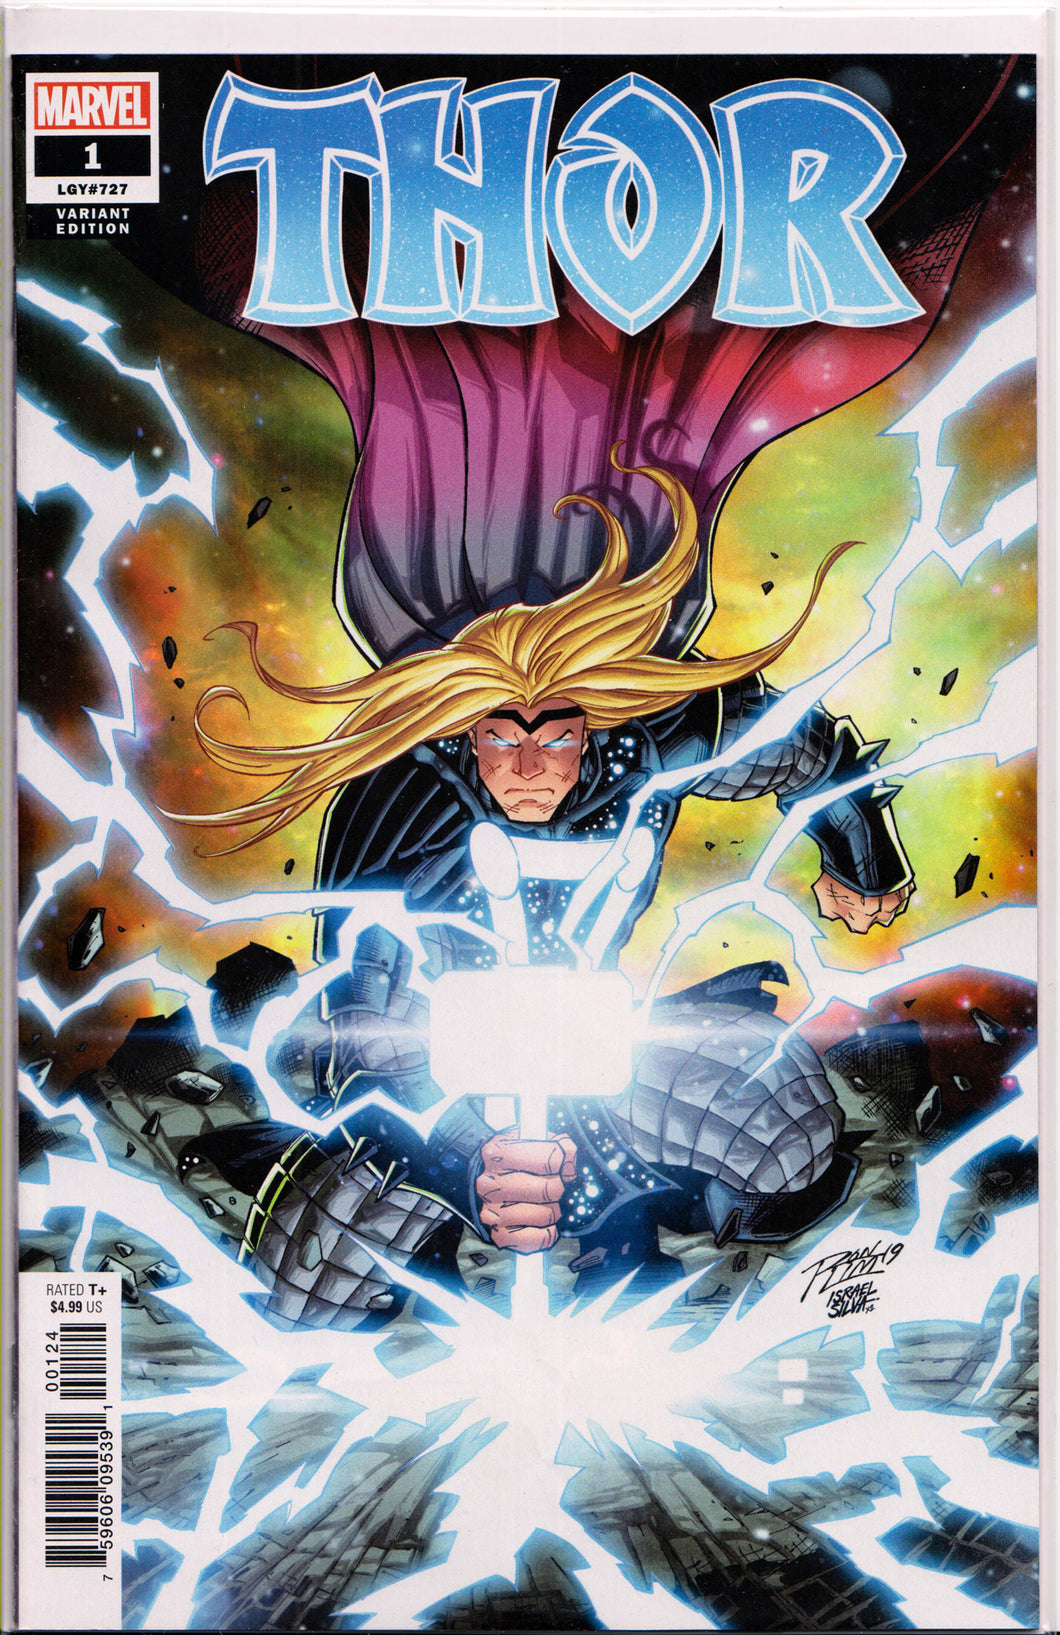 THOR #1 (RON LIM VARIANT) COMIC BOOK ~ Marvel Comics